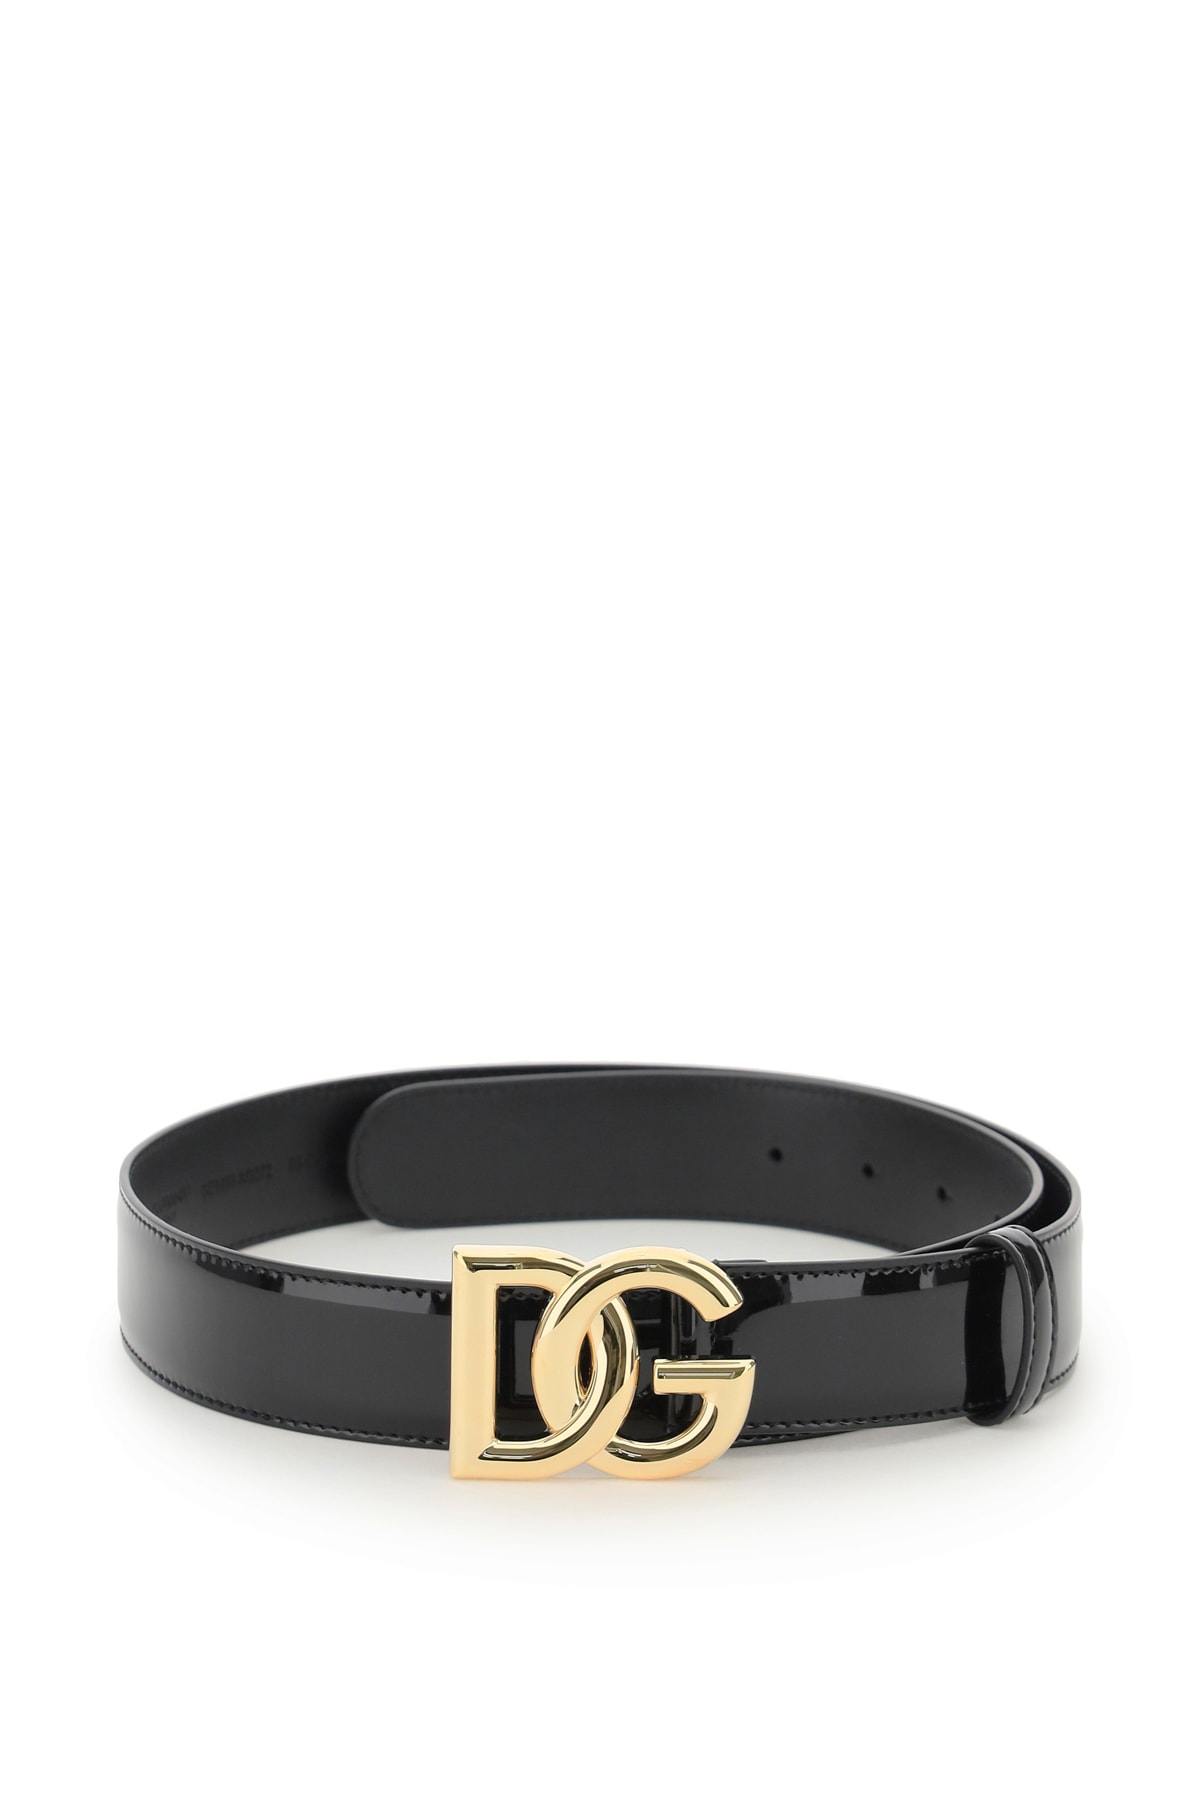 Dolce & Gabbana Patent Belt S 35 Mm